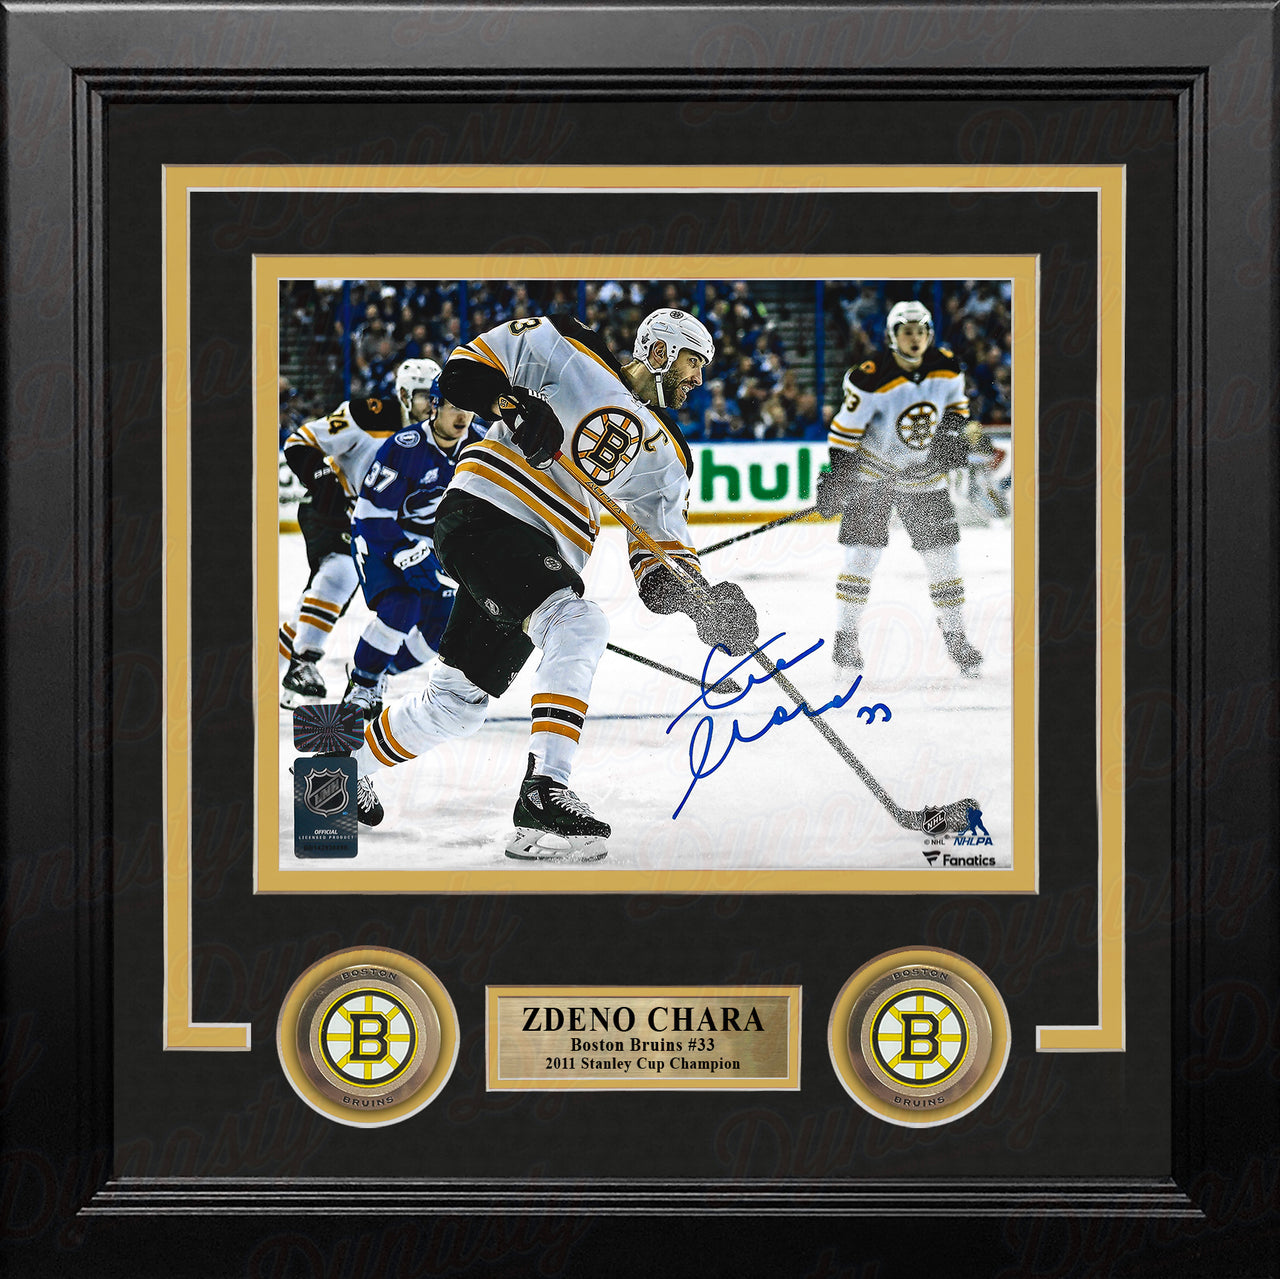 Zdeno Chara in Action Boston Bruins Autographed Framed Hockey Photo - Dynasty Sports & Framing 